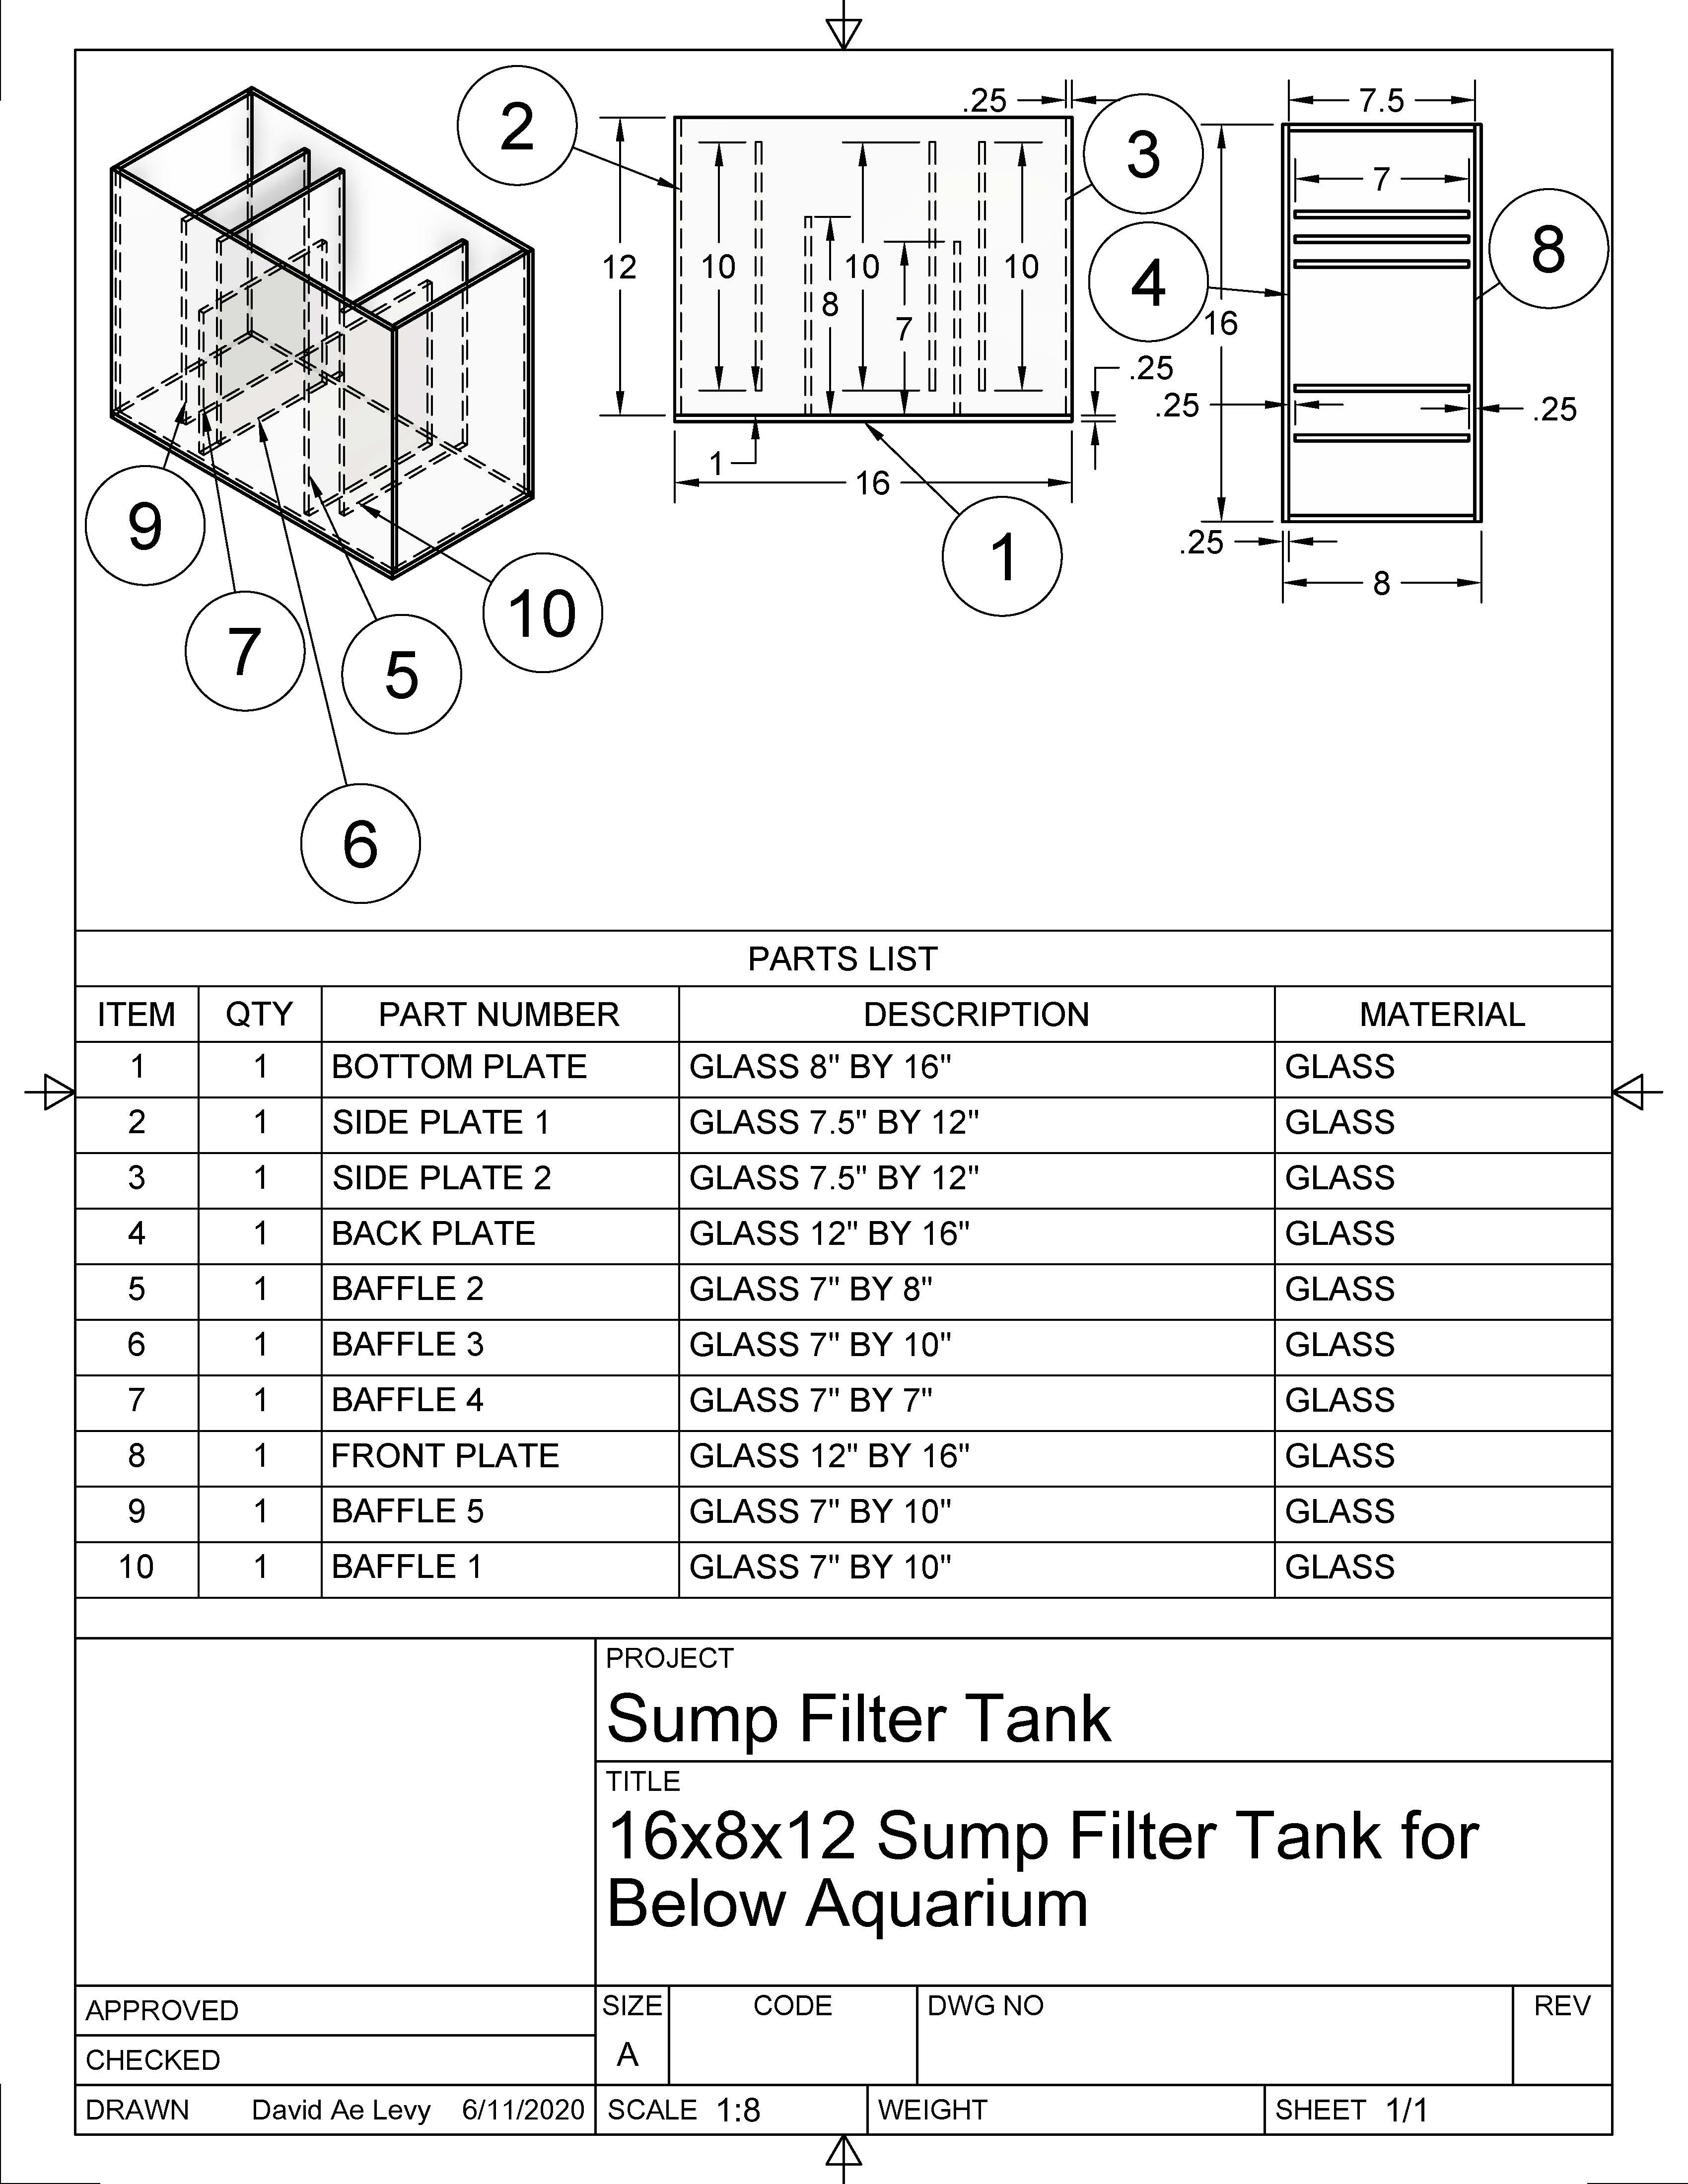 16x8x12 Sump Filter Tank for Below Aquarium Drawing.jpg